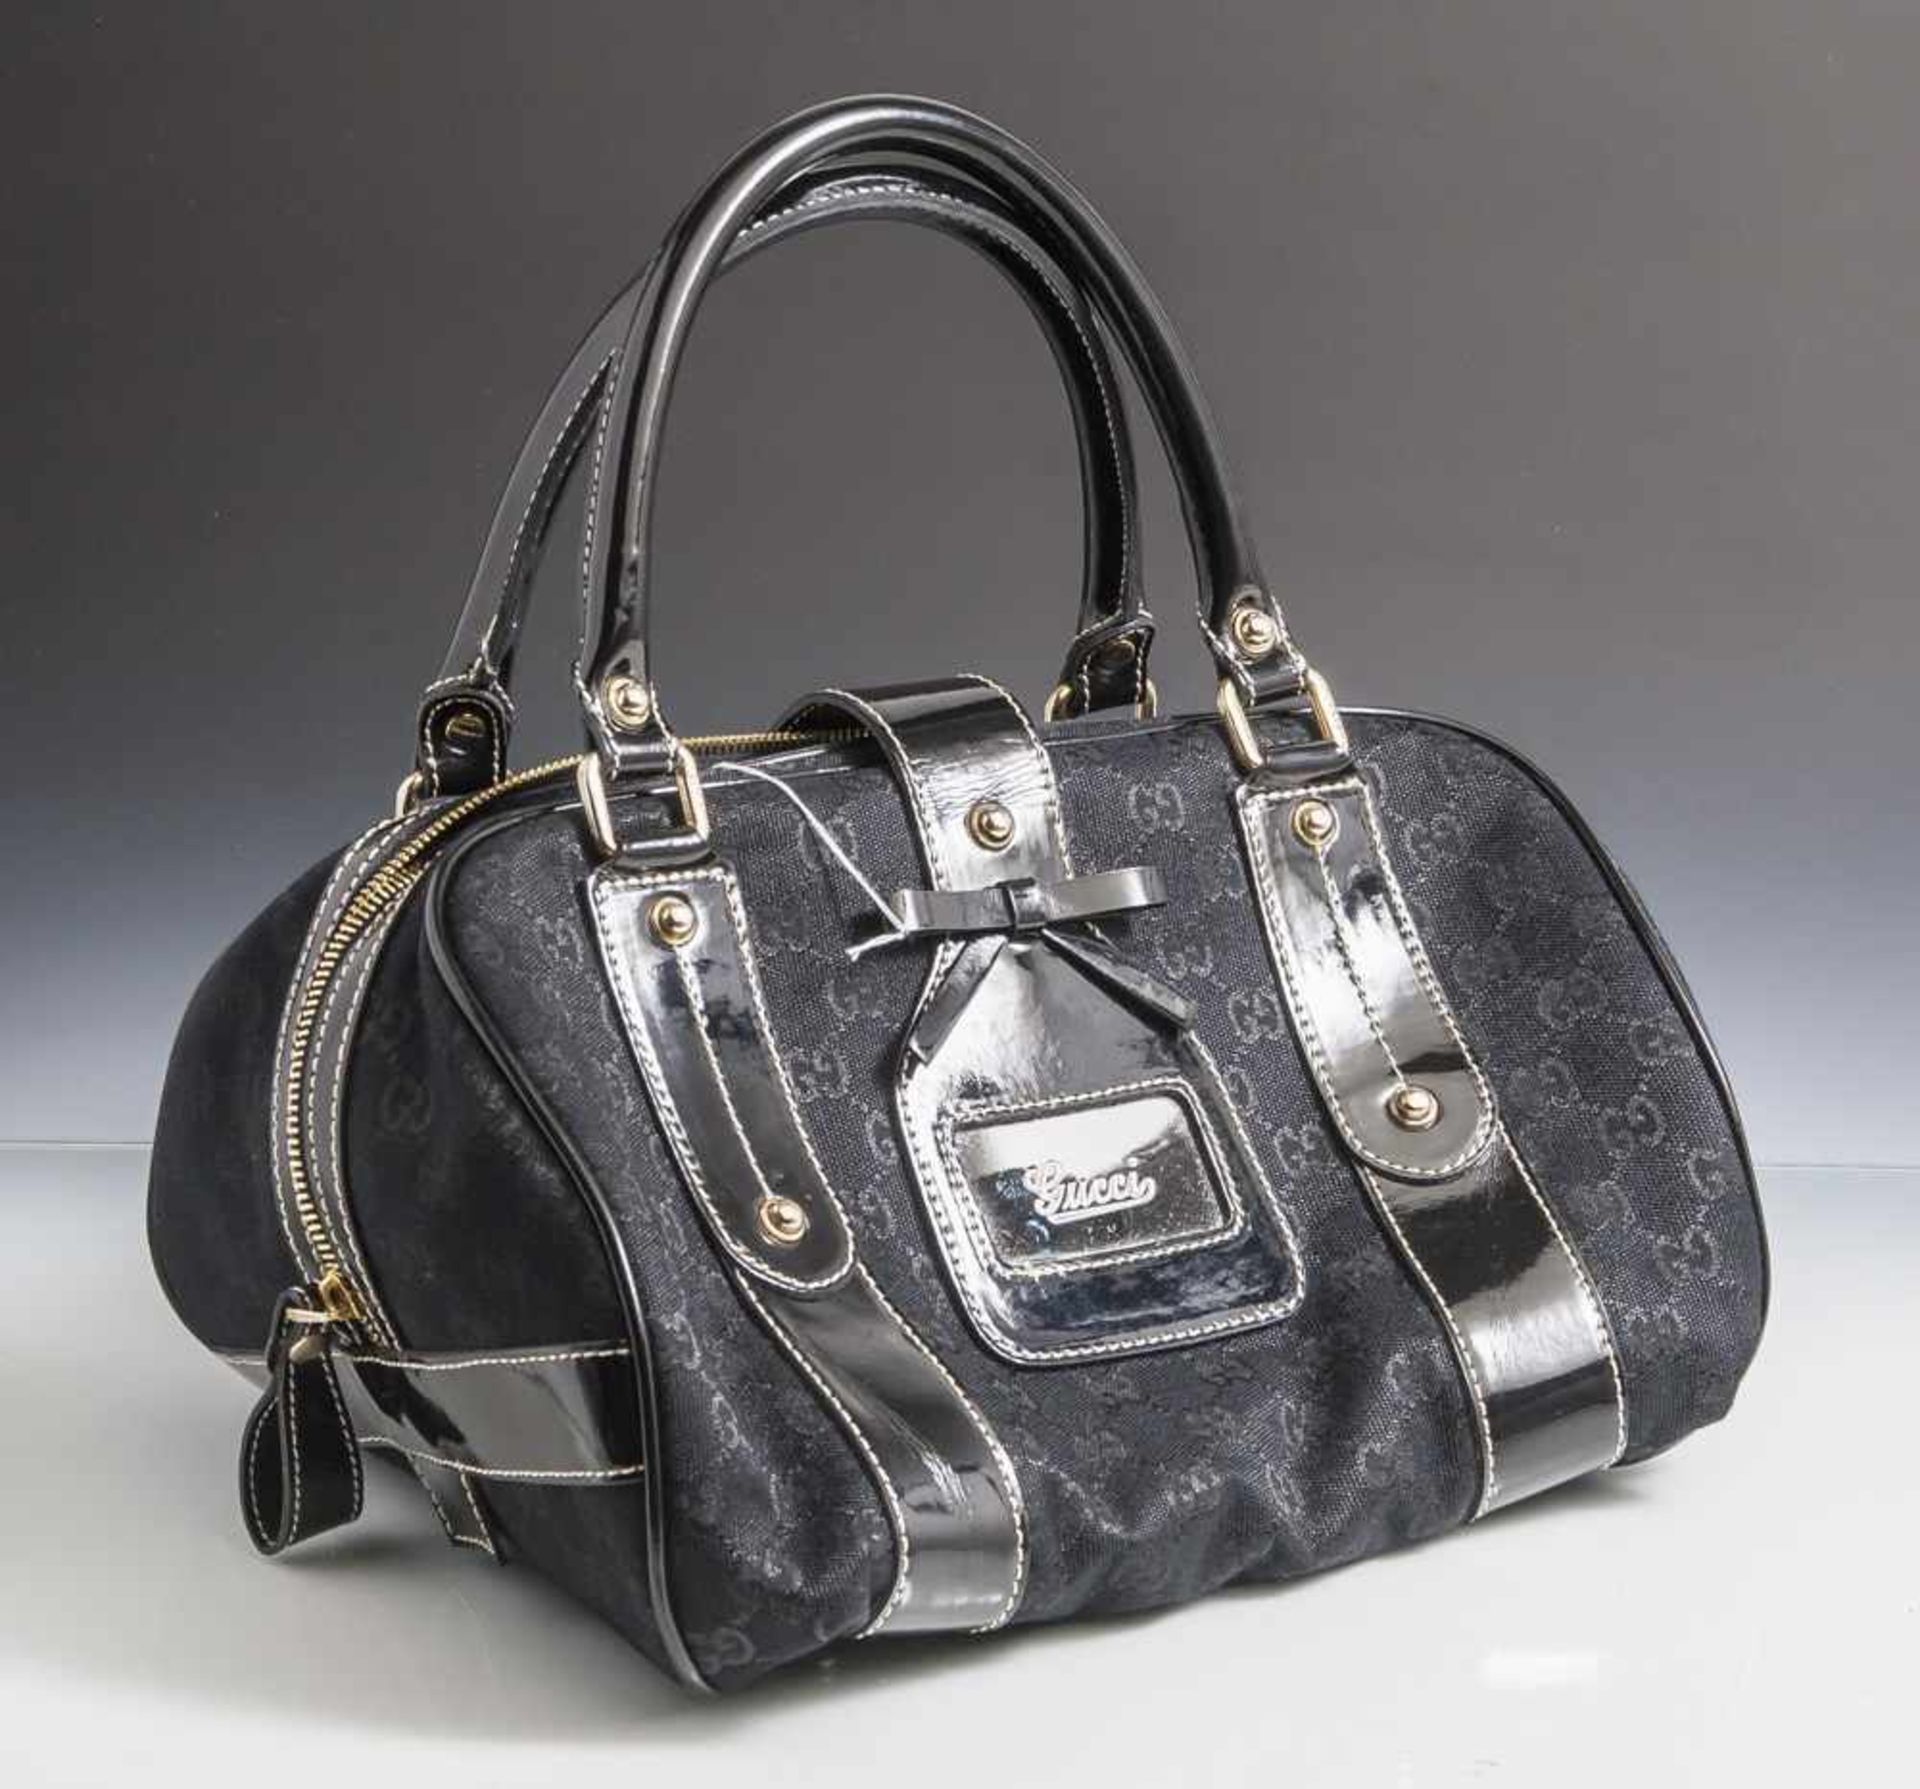 Gucci Damenhandtasche, schwarzer Stoff, Leder hochglanz, Beschlag Messing vergoldet. 2 kl.